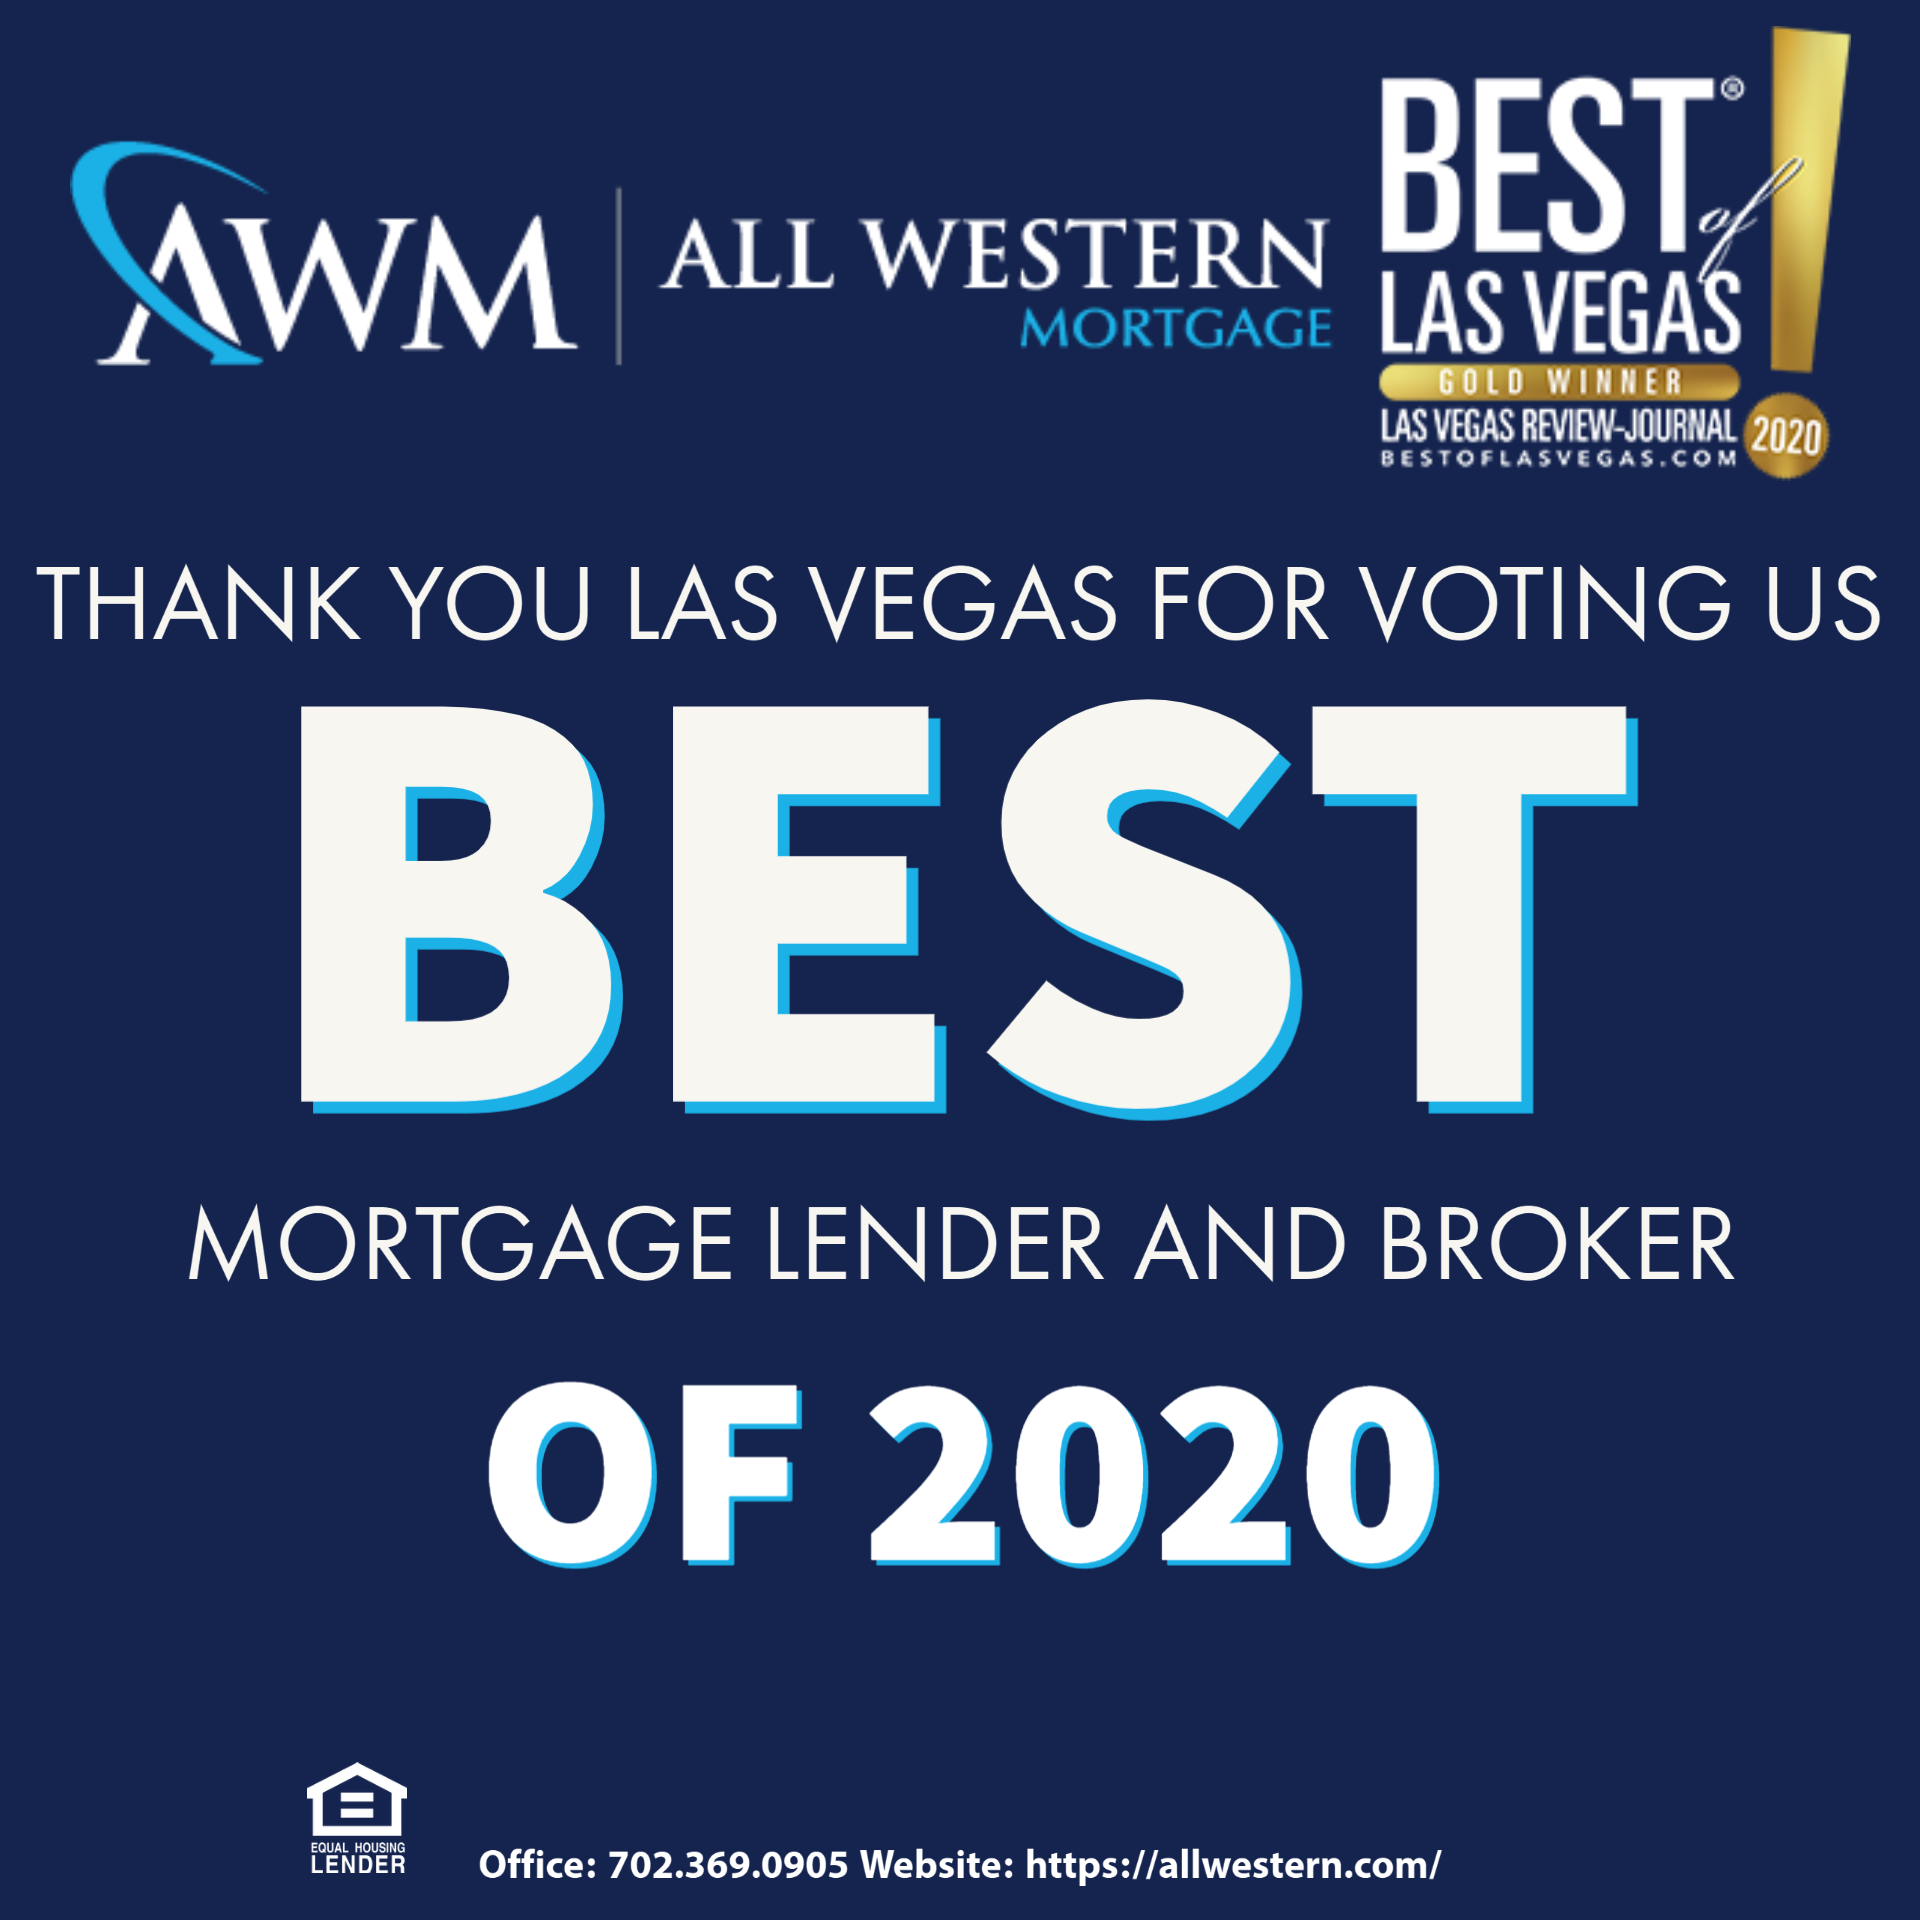 21 Best Las Vegas Mortgage Brokers - Expertise.com